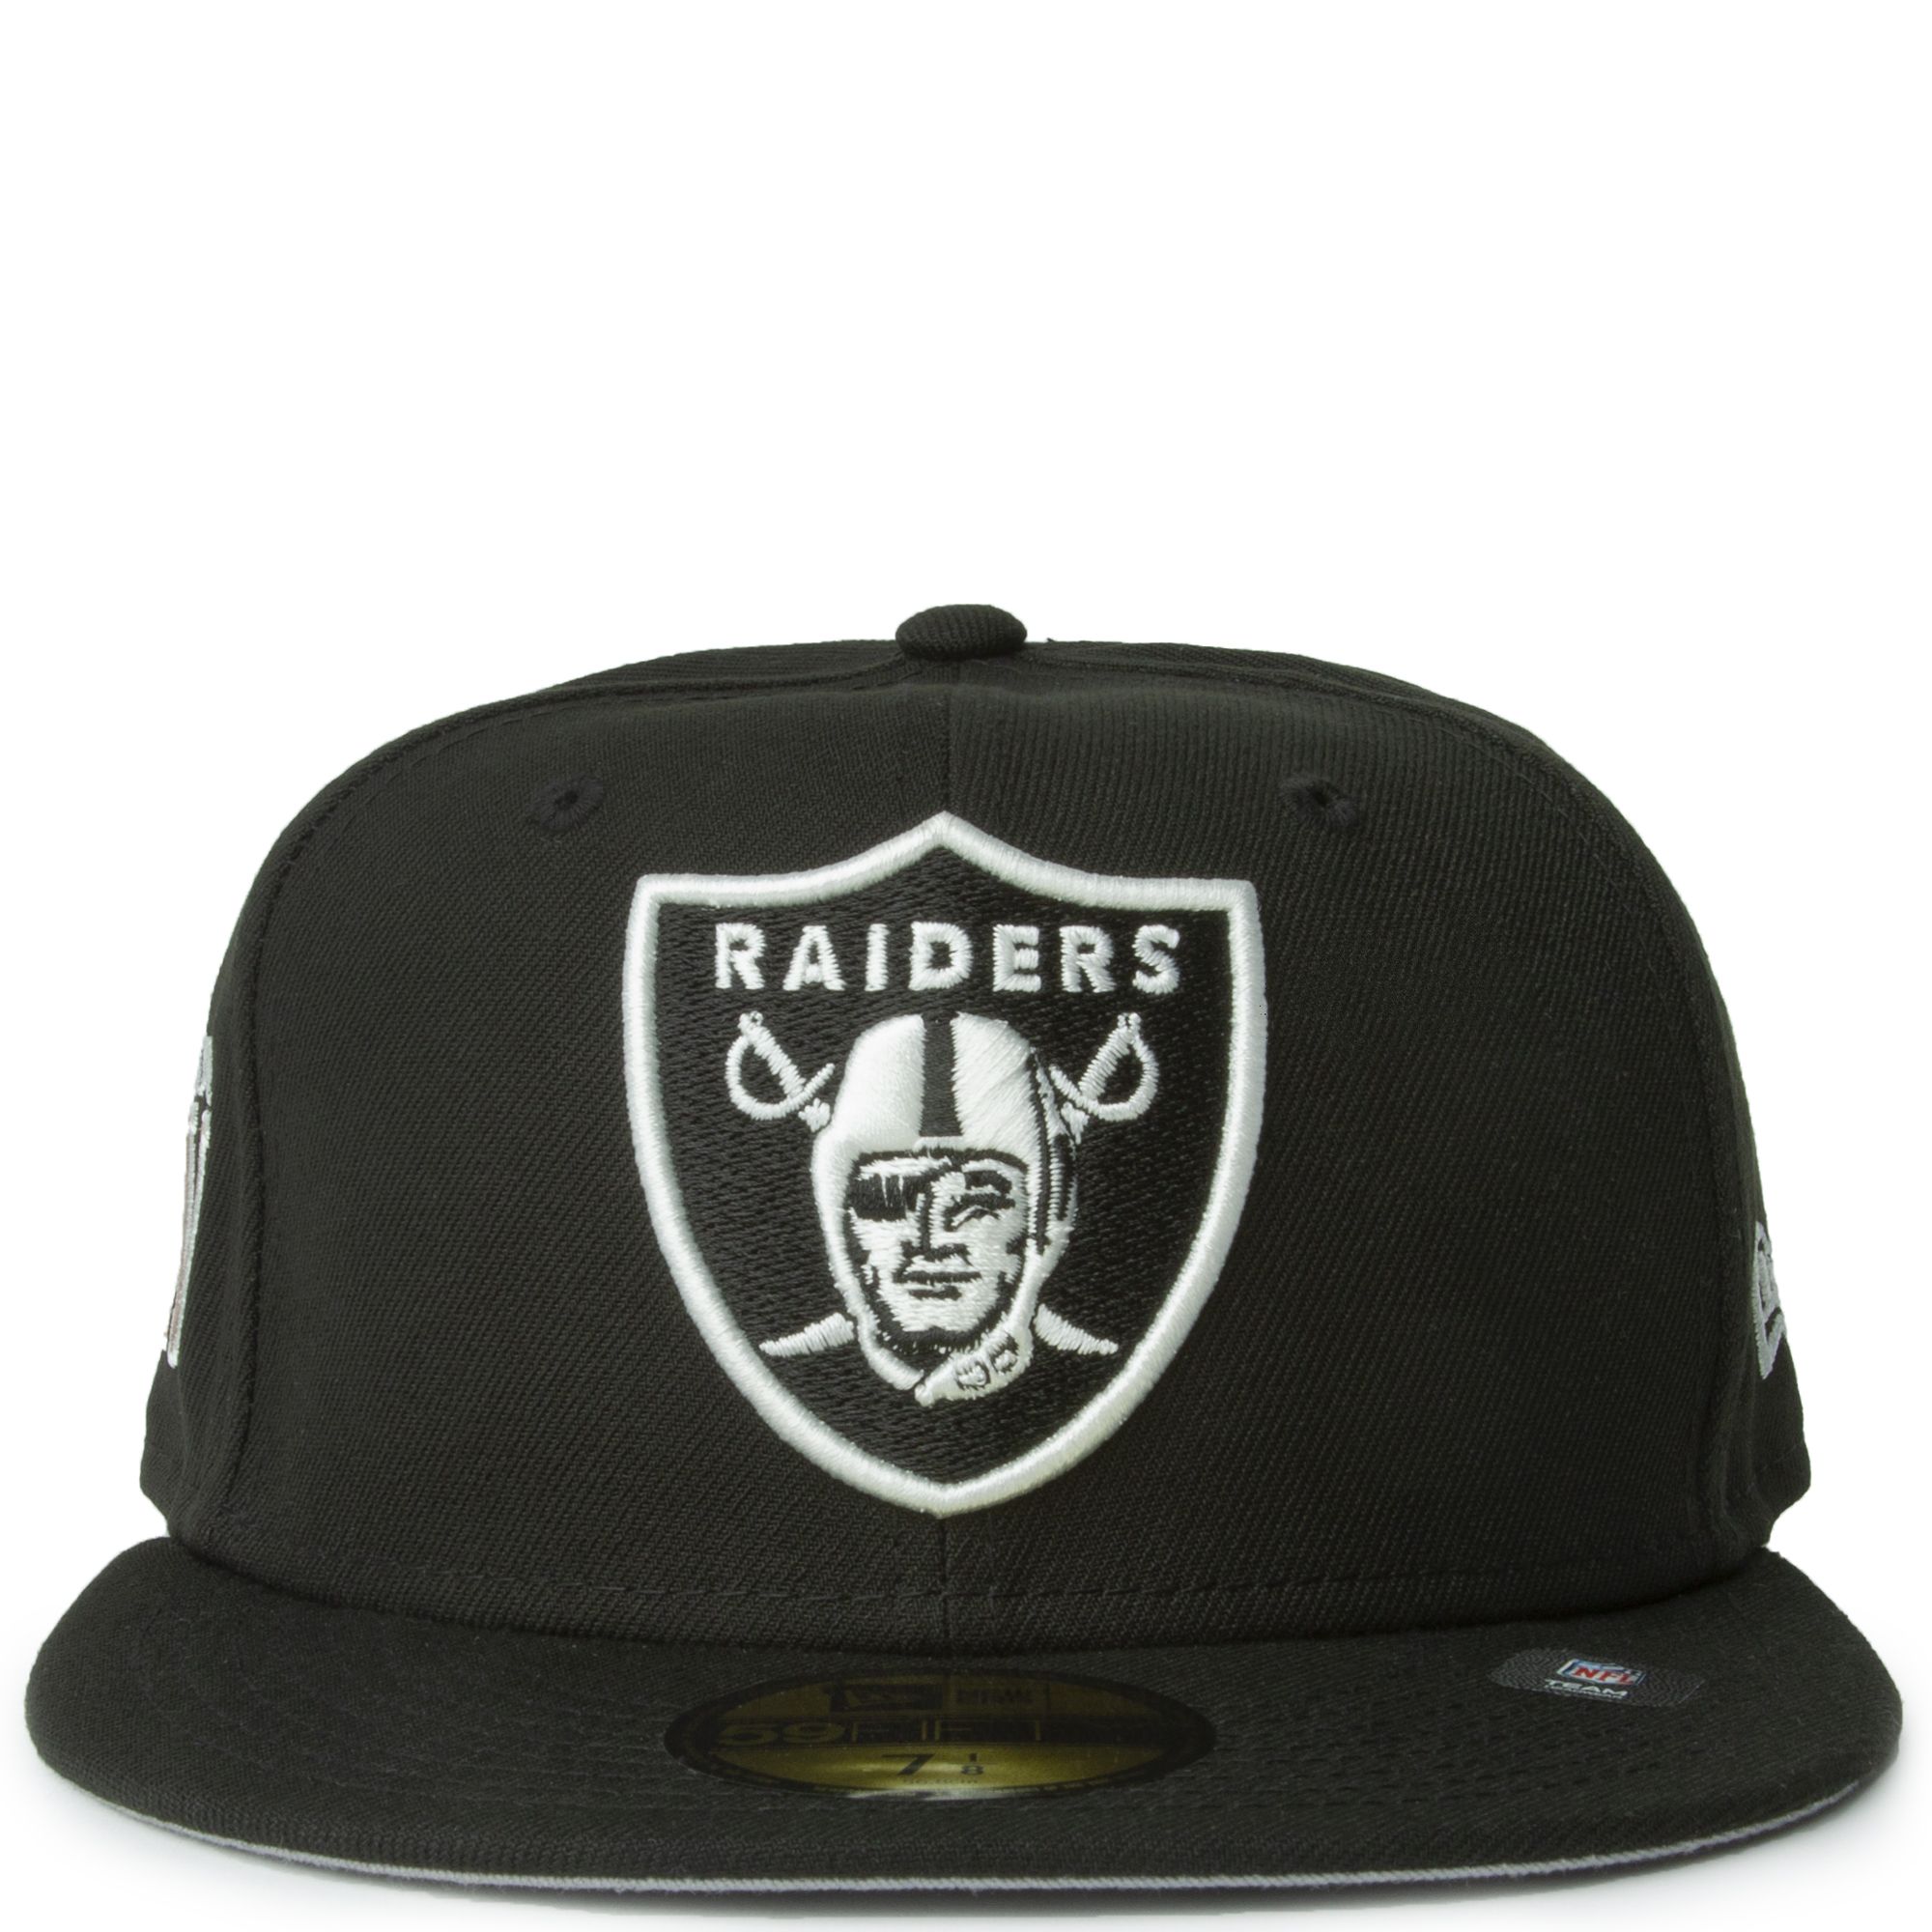 Las Vegas Raiders Real Men Wear Black Hat Cap